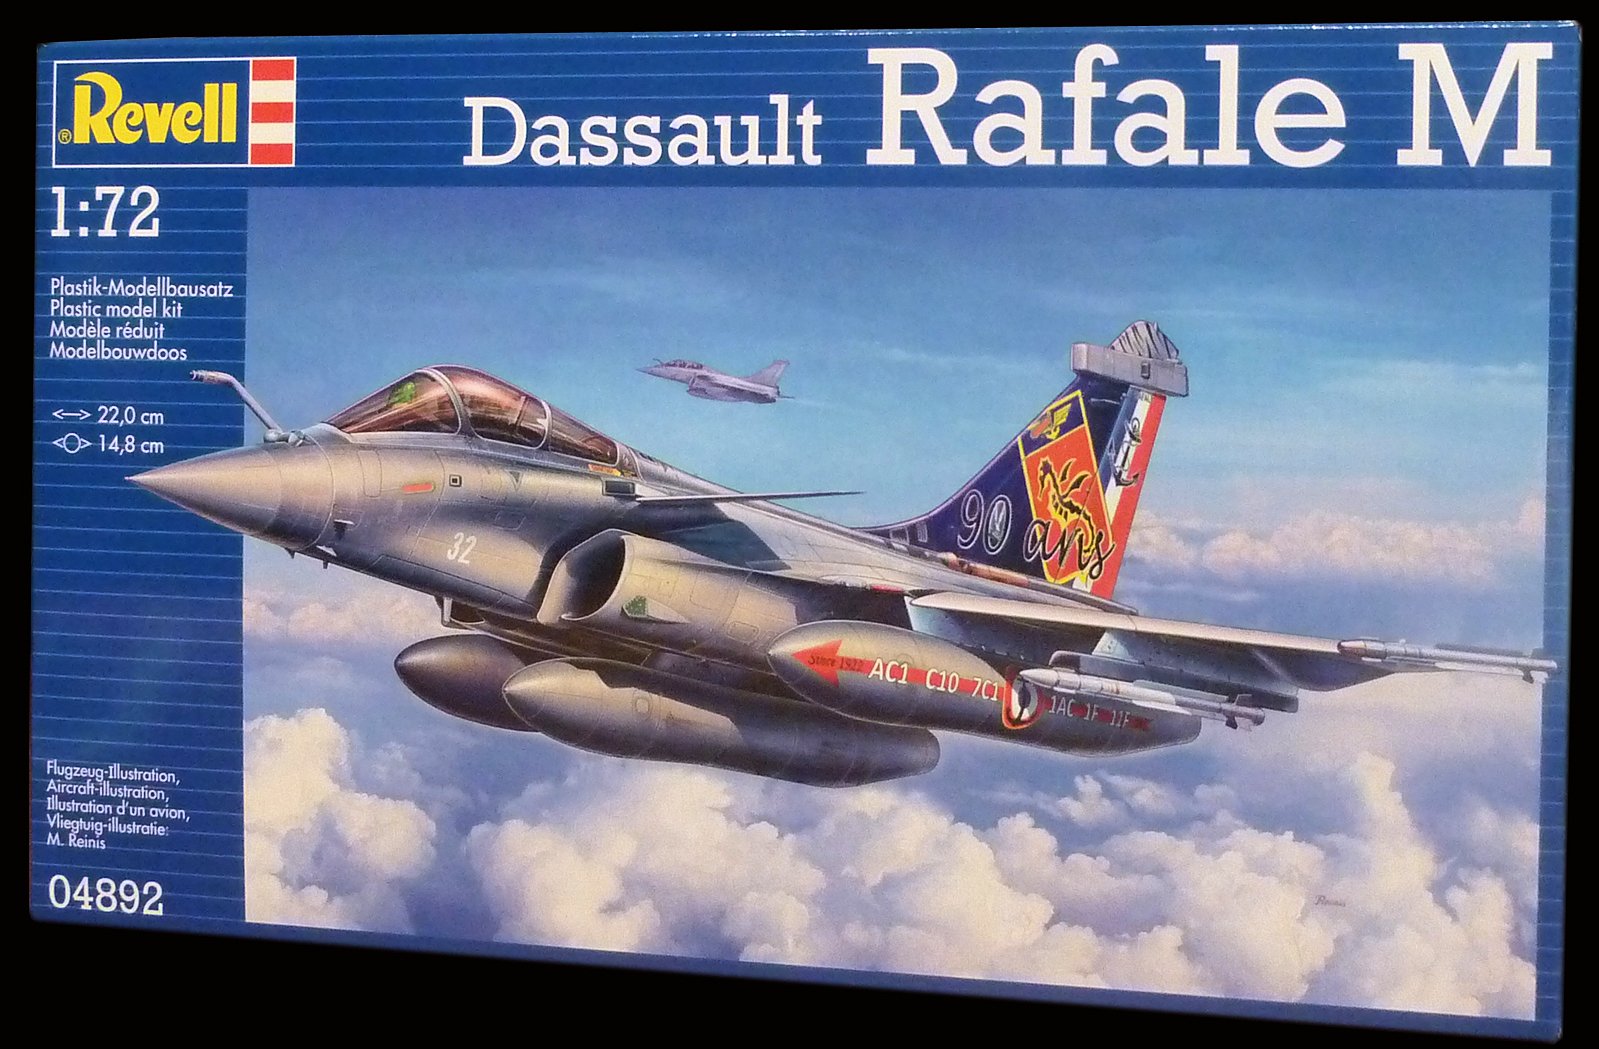 Rafale M Operations Exterieures Fighter 2011 Plastique Kit 1:72 Model Italeri 